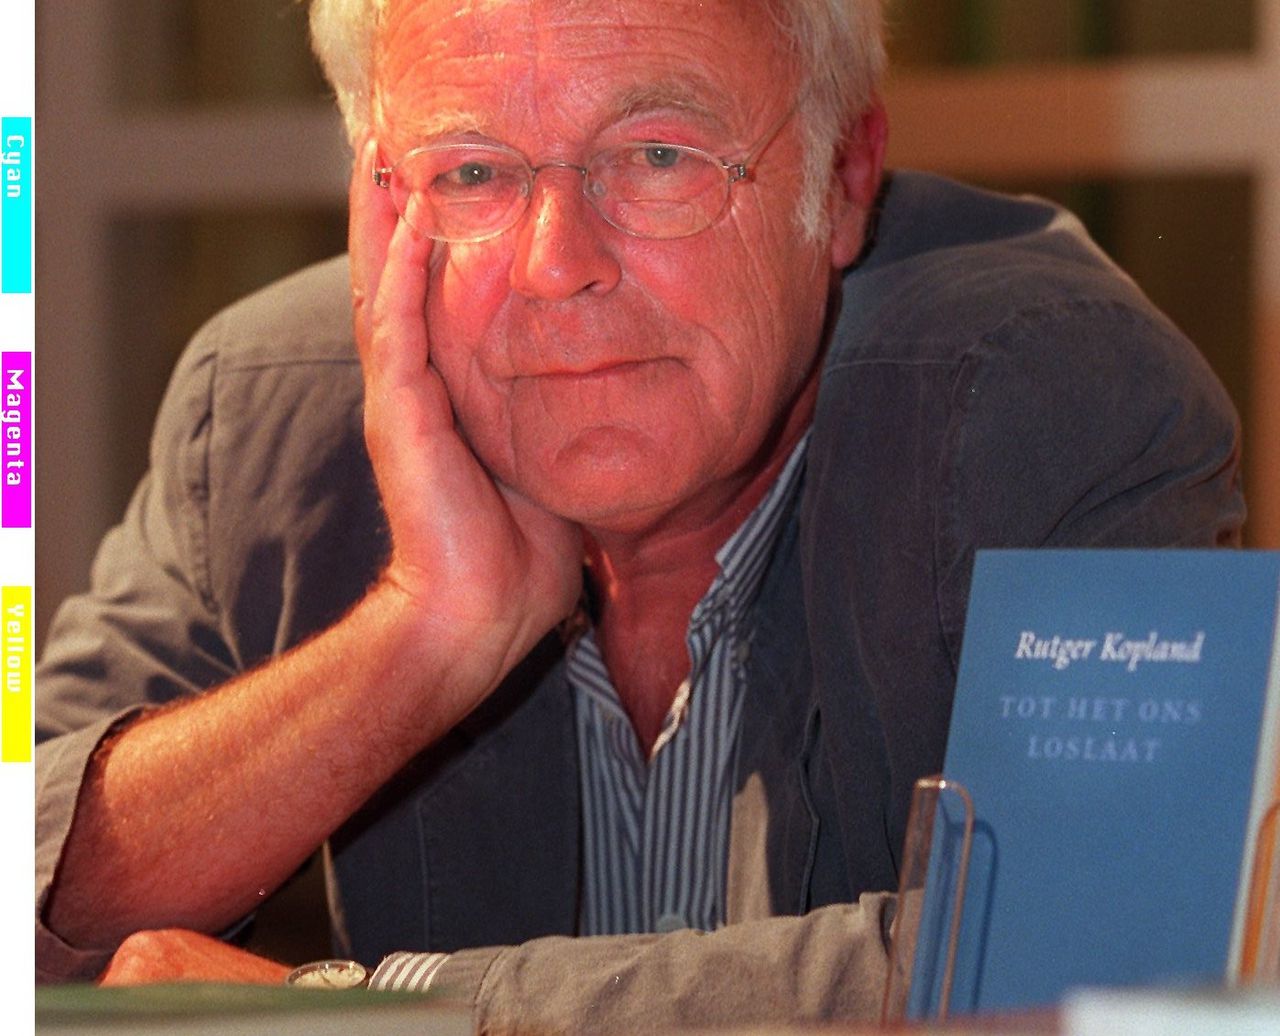 Rutger Kopland in 1998